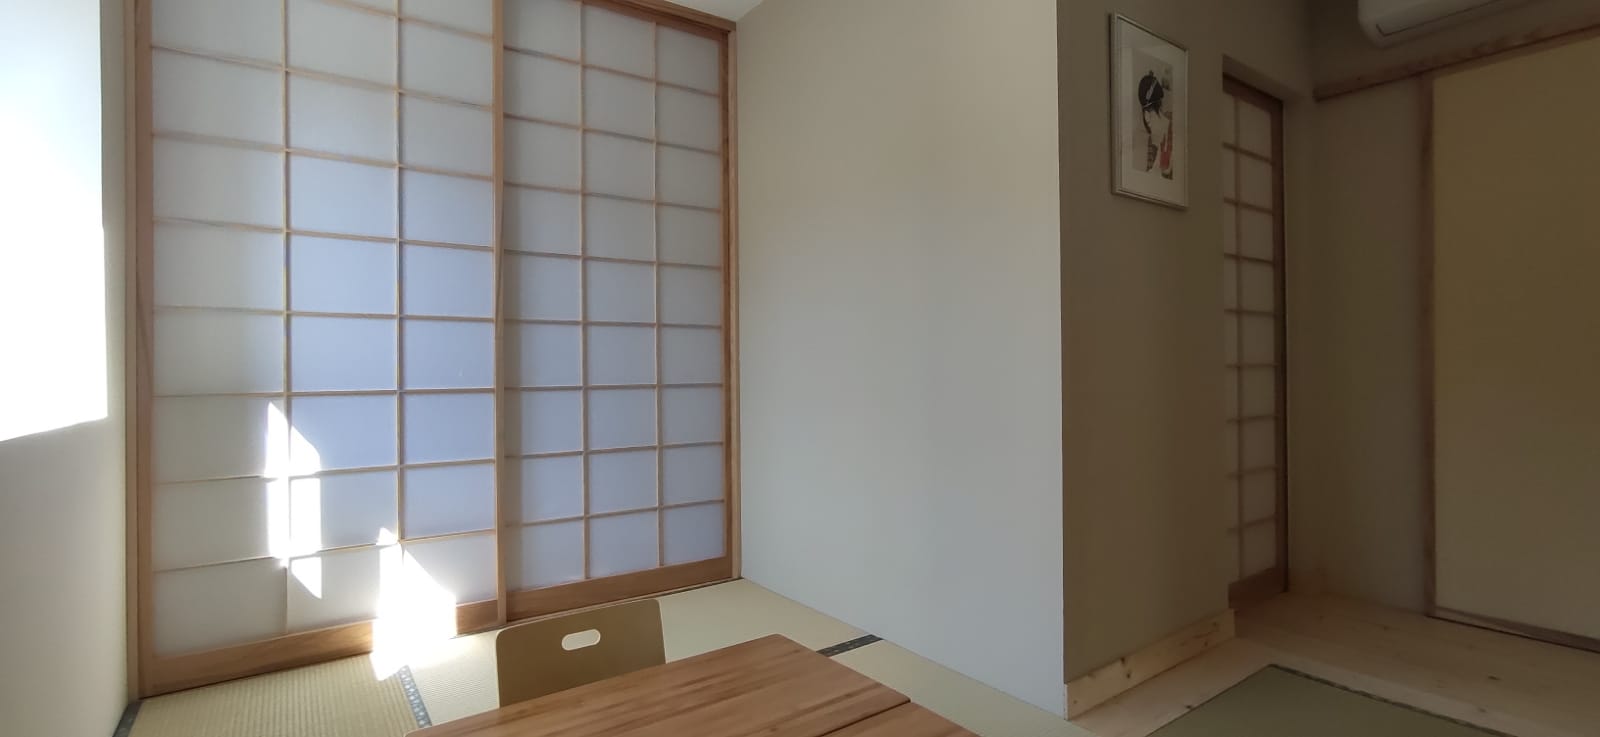 maison shizen ryokan france perigord maison hote japonaise bordeaux